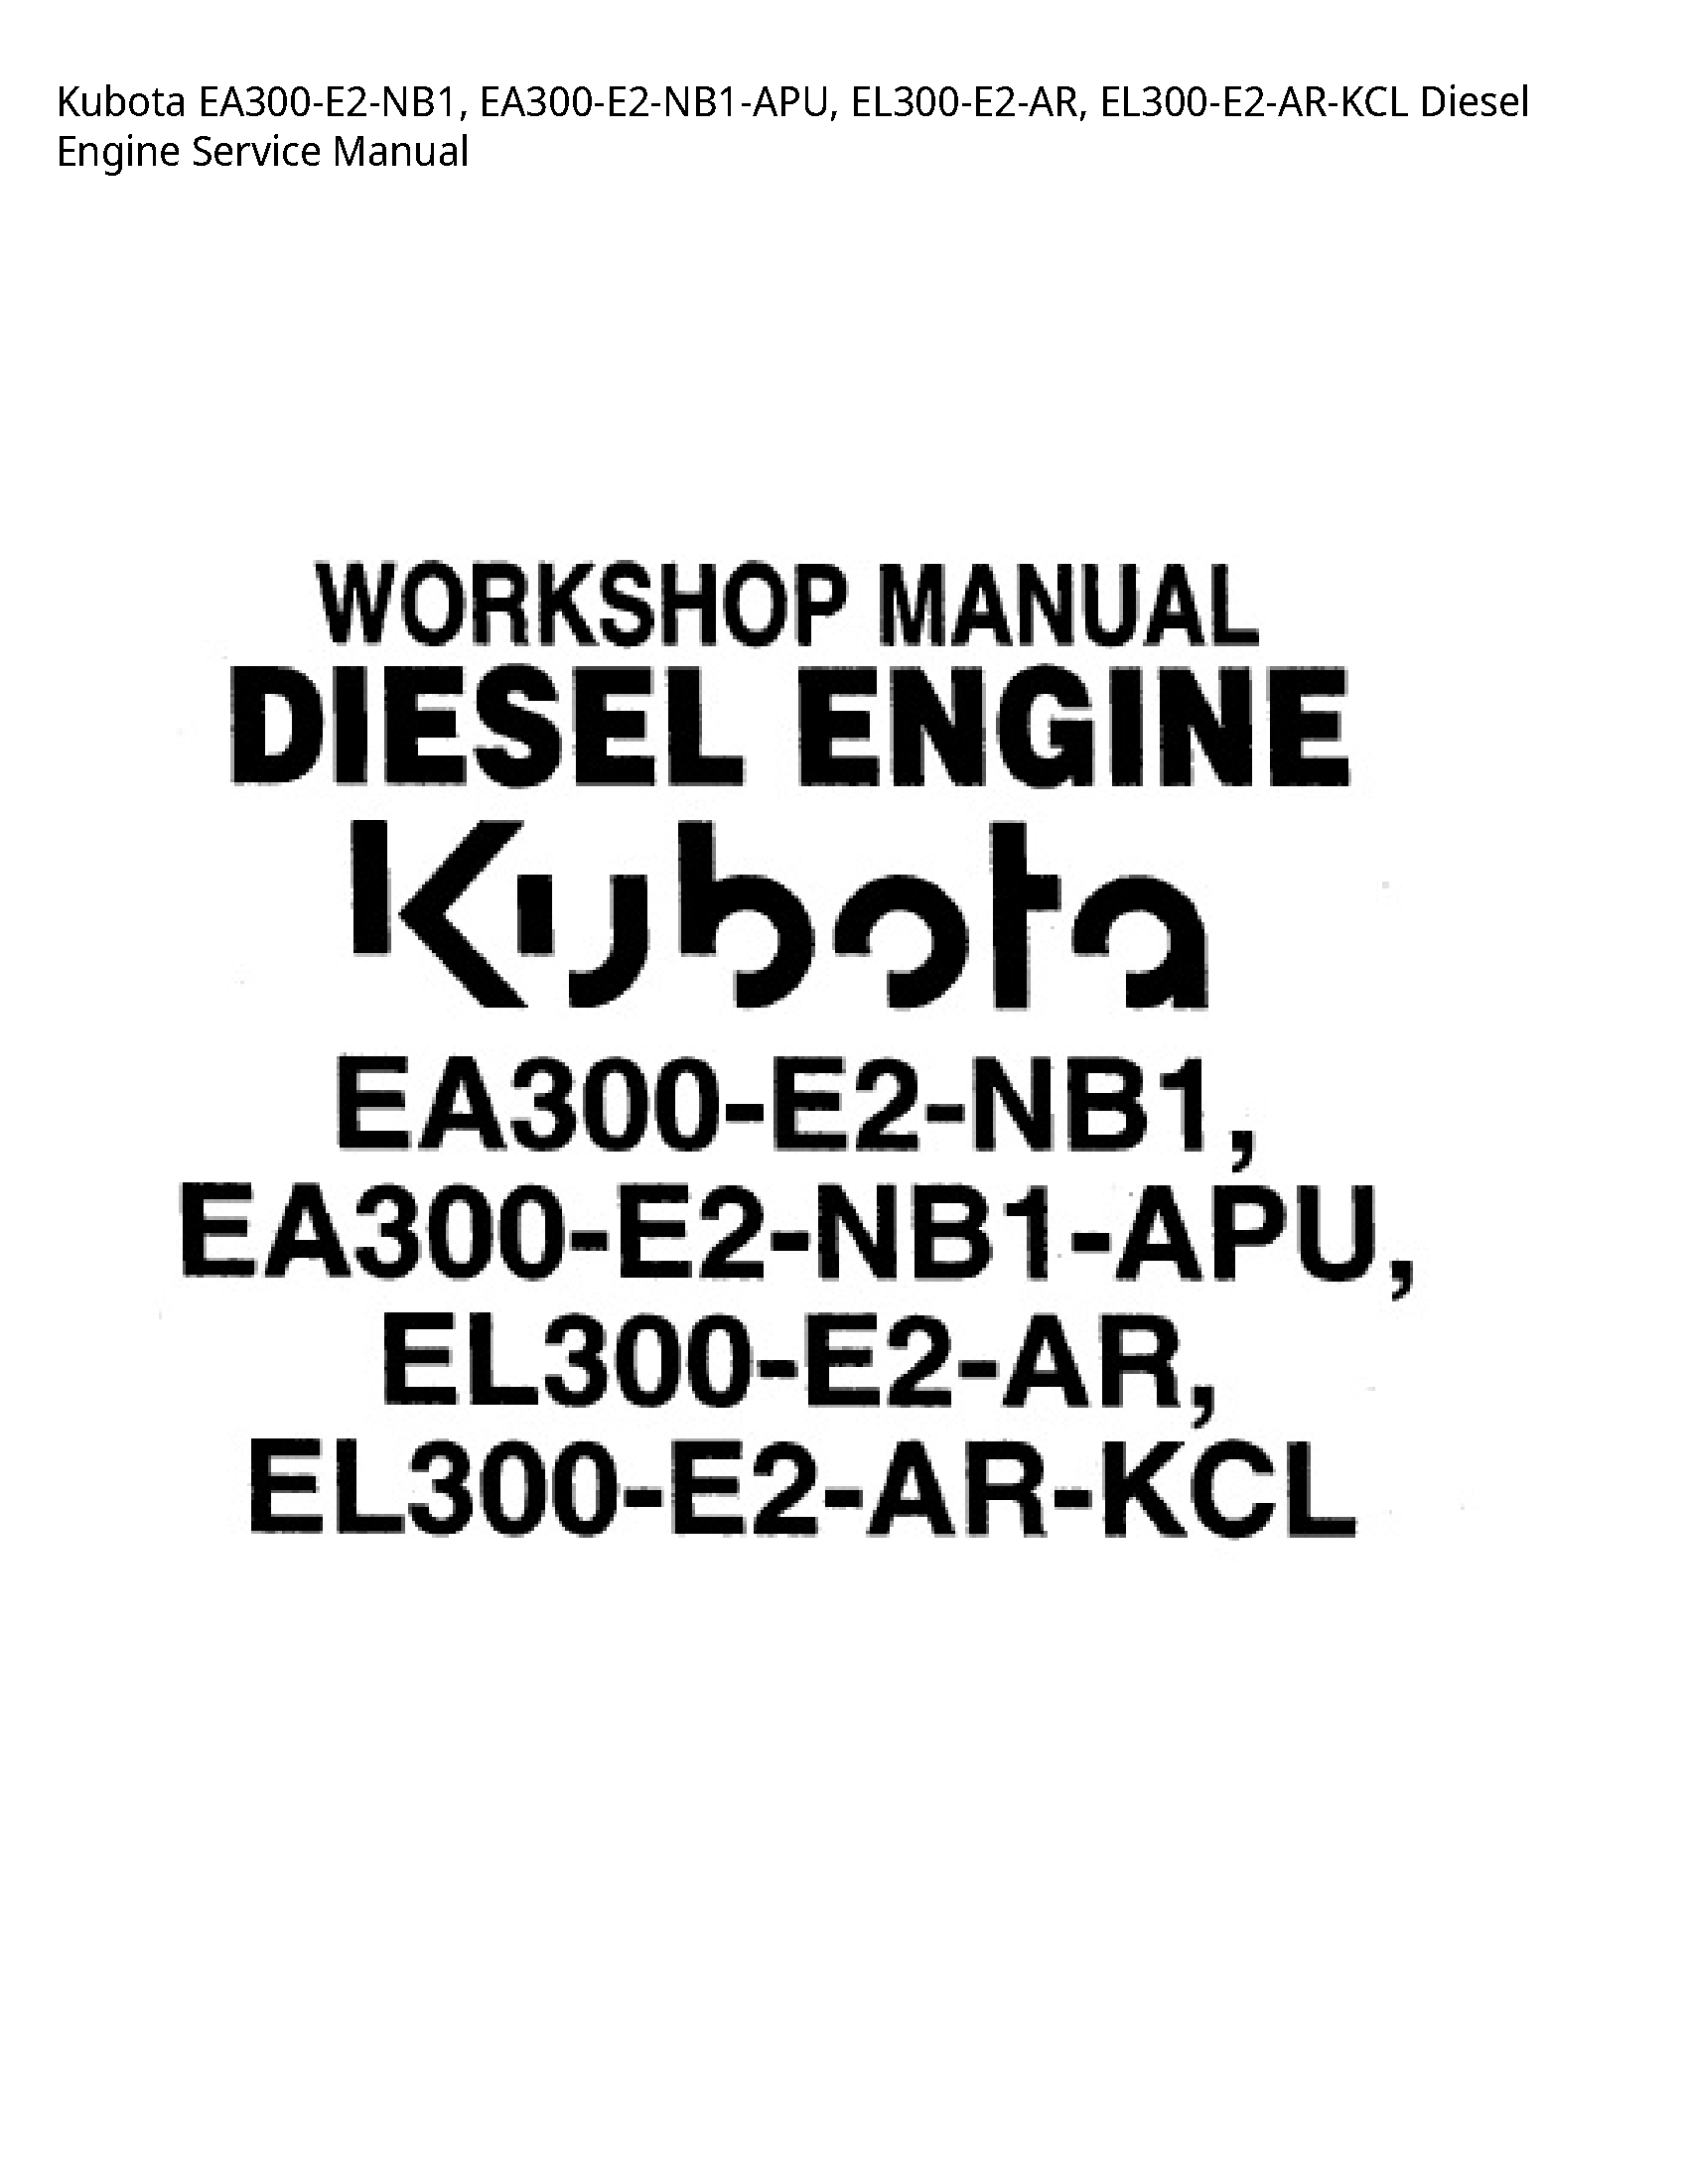 Kubota EA300-E2-NB1  EA300-E2-NB1-APU  EL300-E2-AR  EL300-E2-AR-KCL Diesel Engine Service Manual